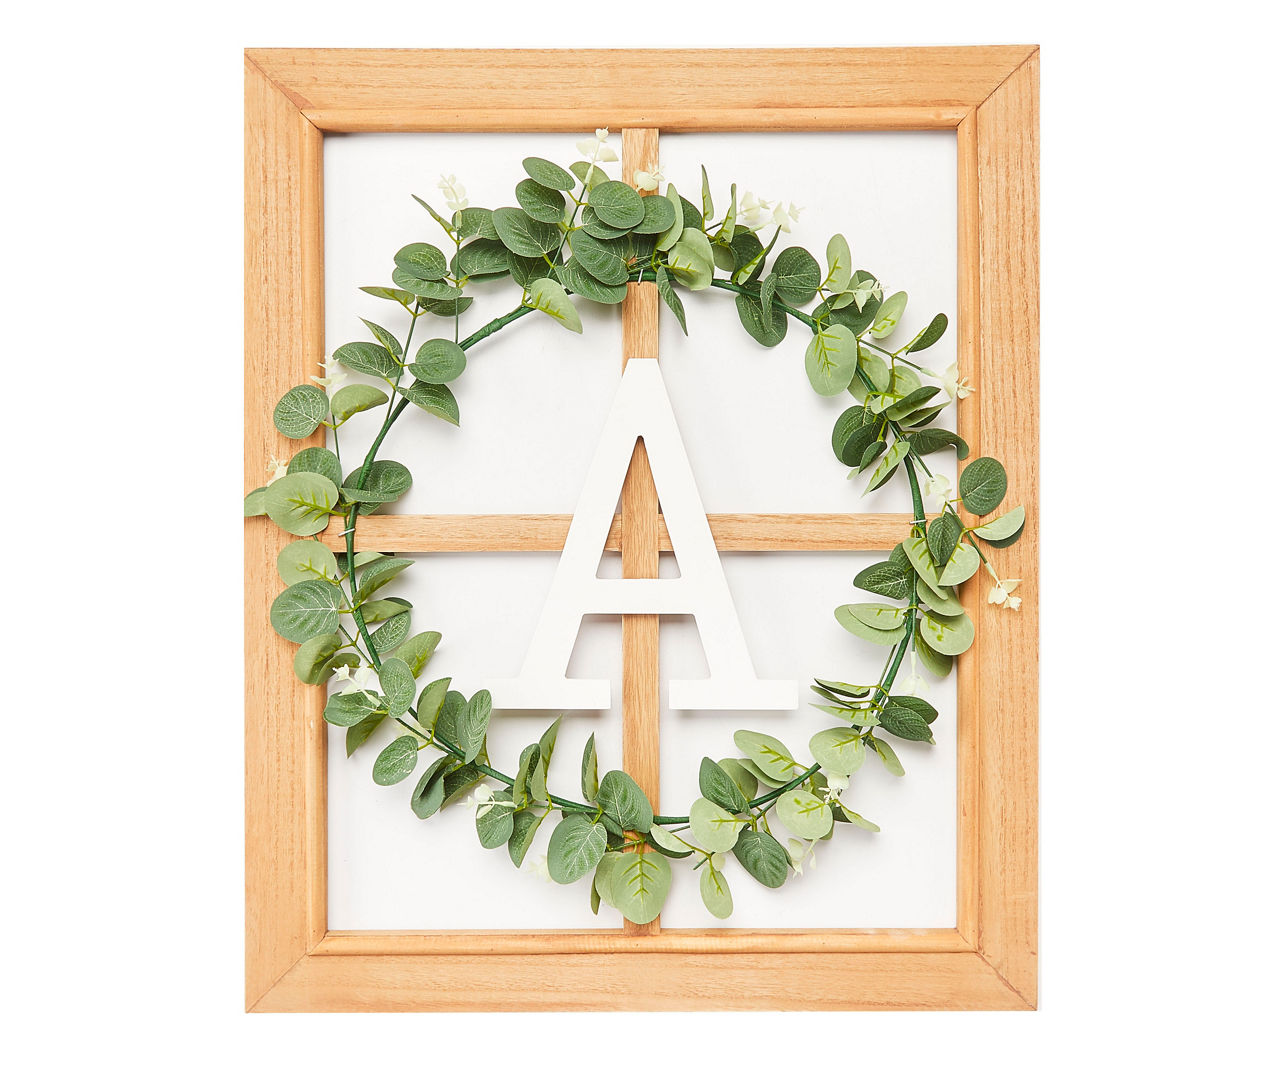 "A" Monogram Framed Windowpane Plaque with Greenery Wreath